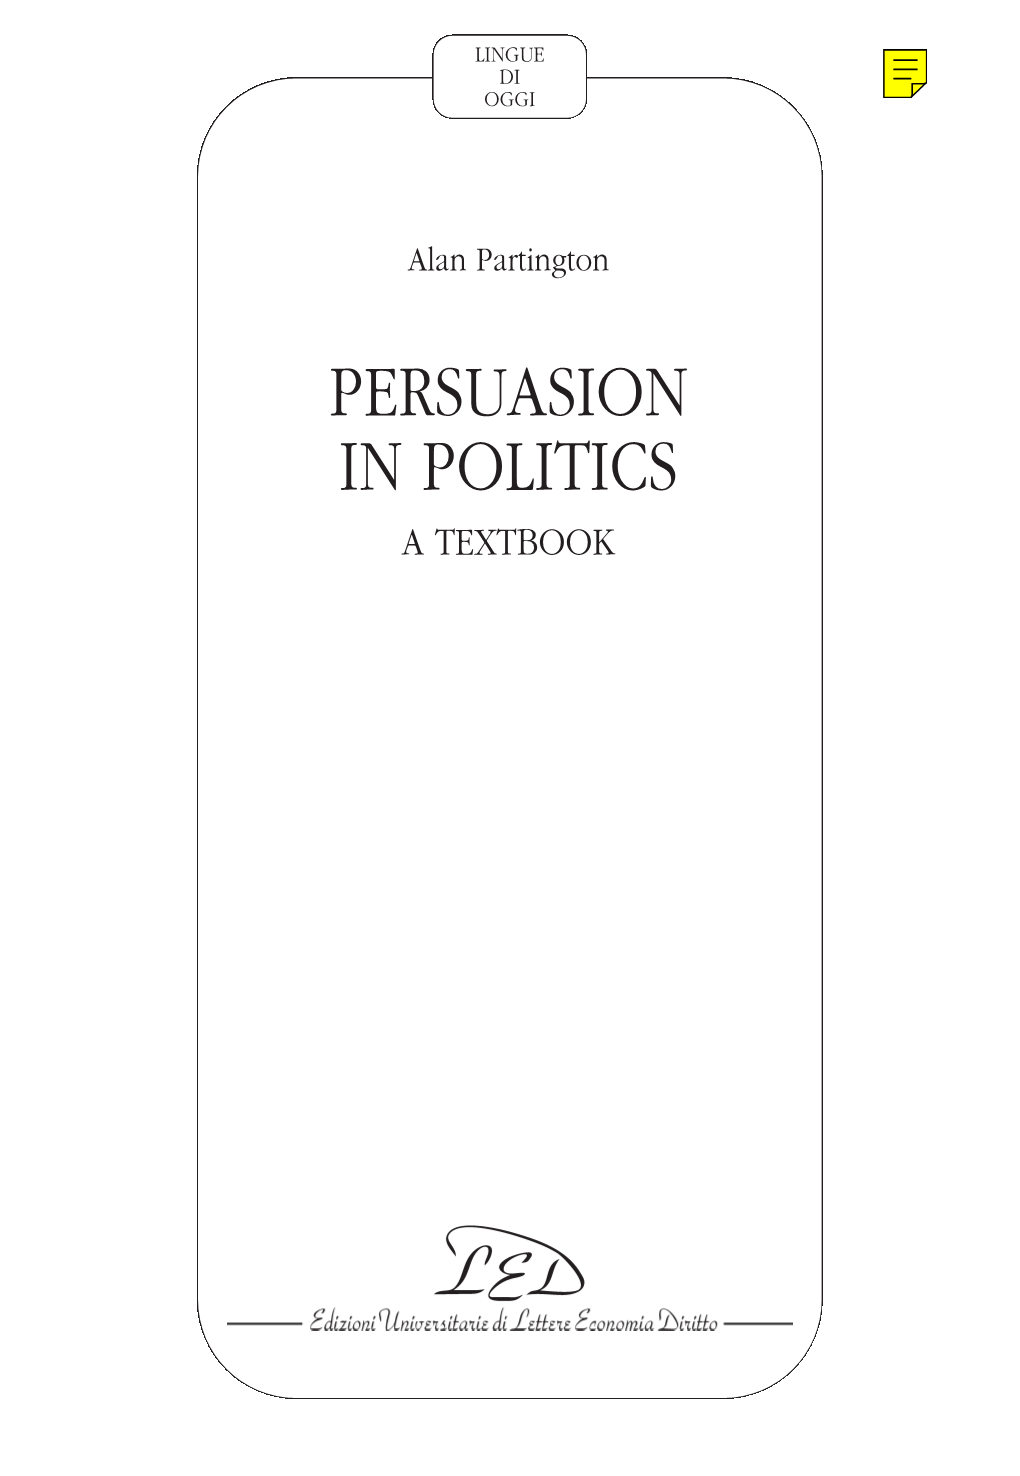 PERSUASION in POLITICS a TEXTBOOK Contents